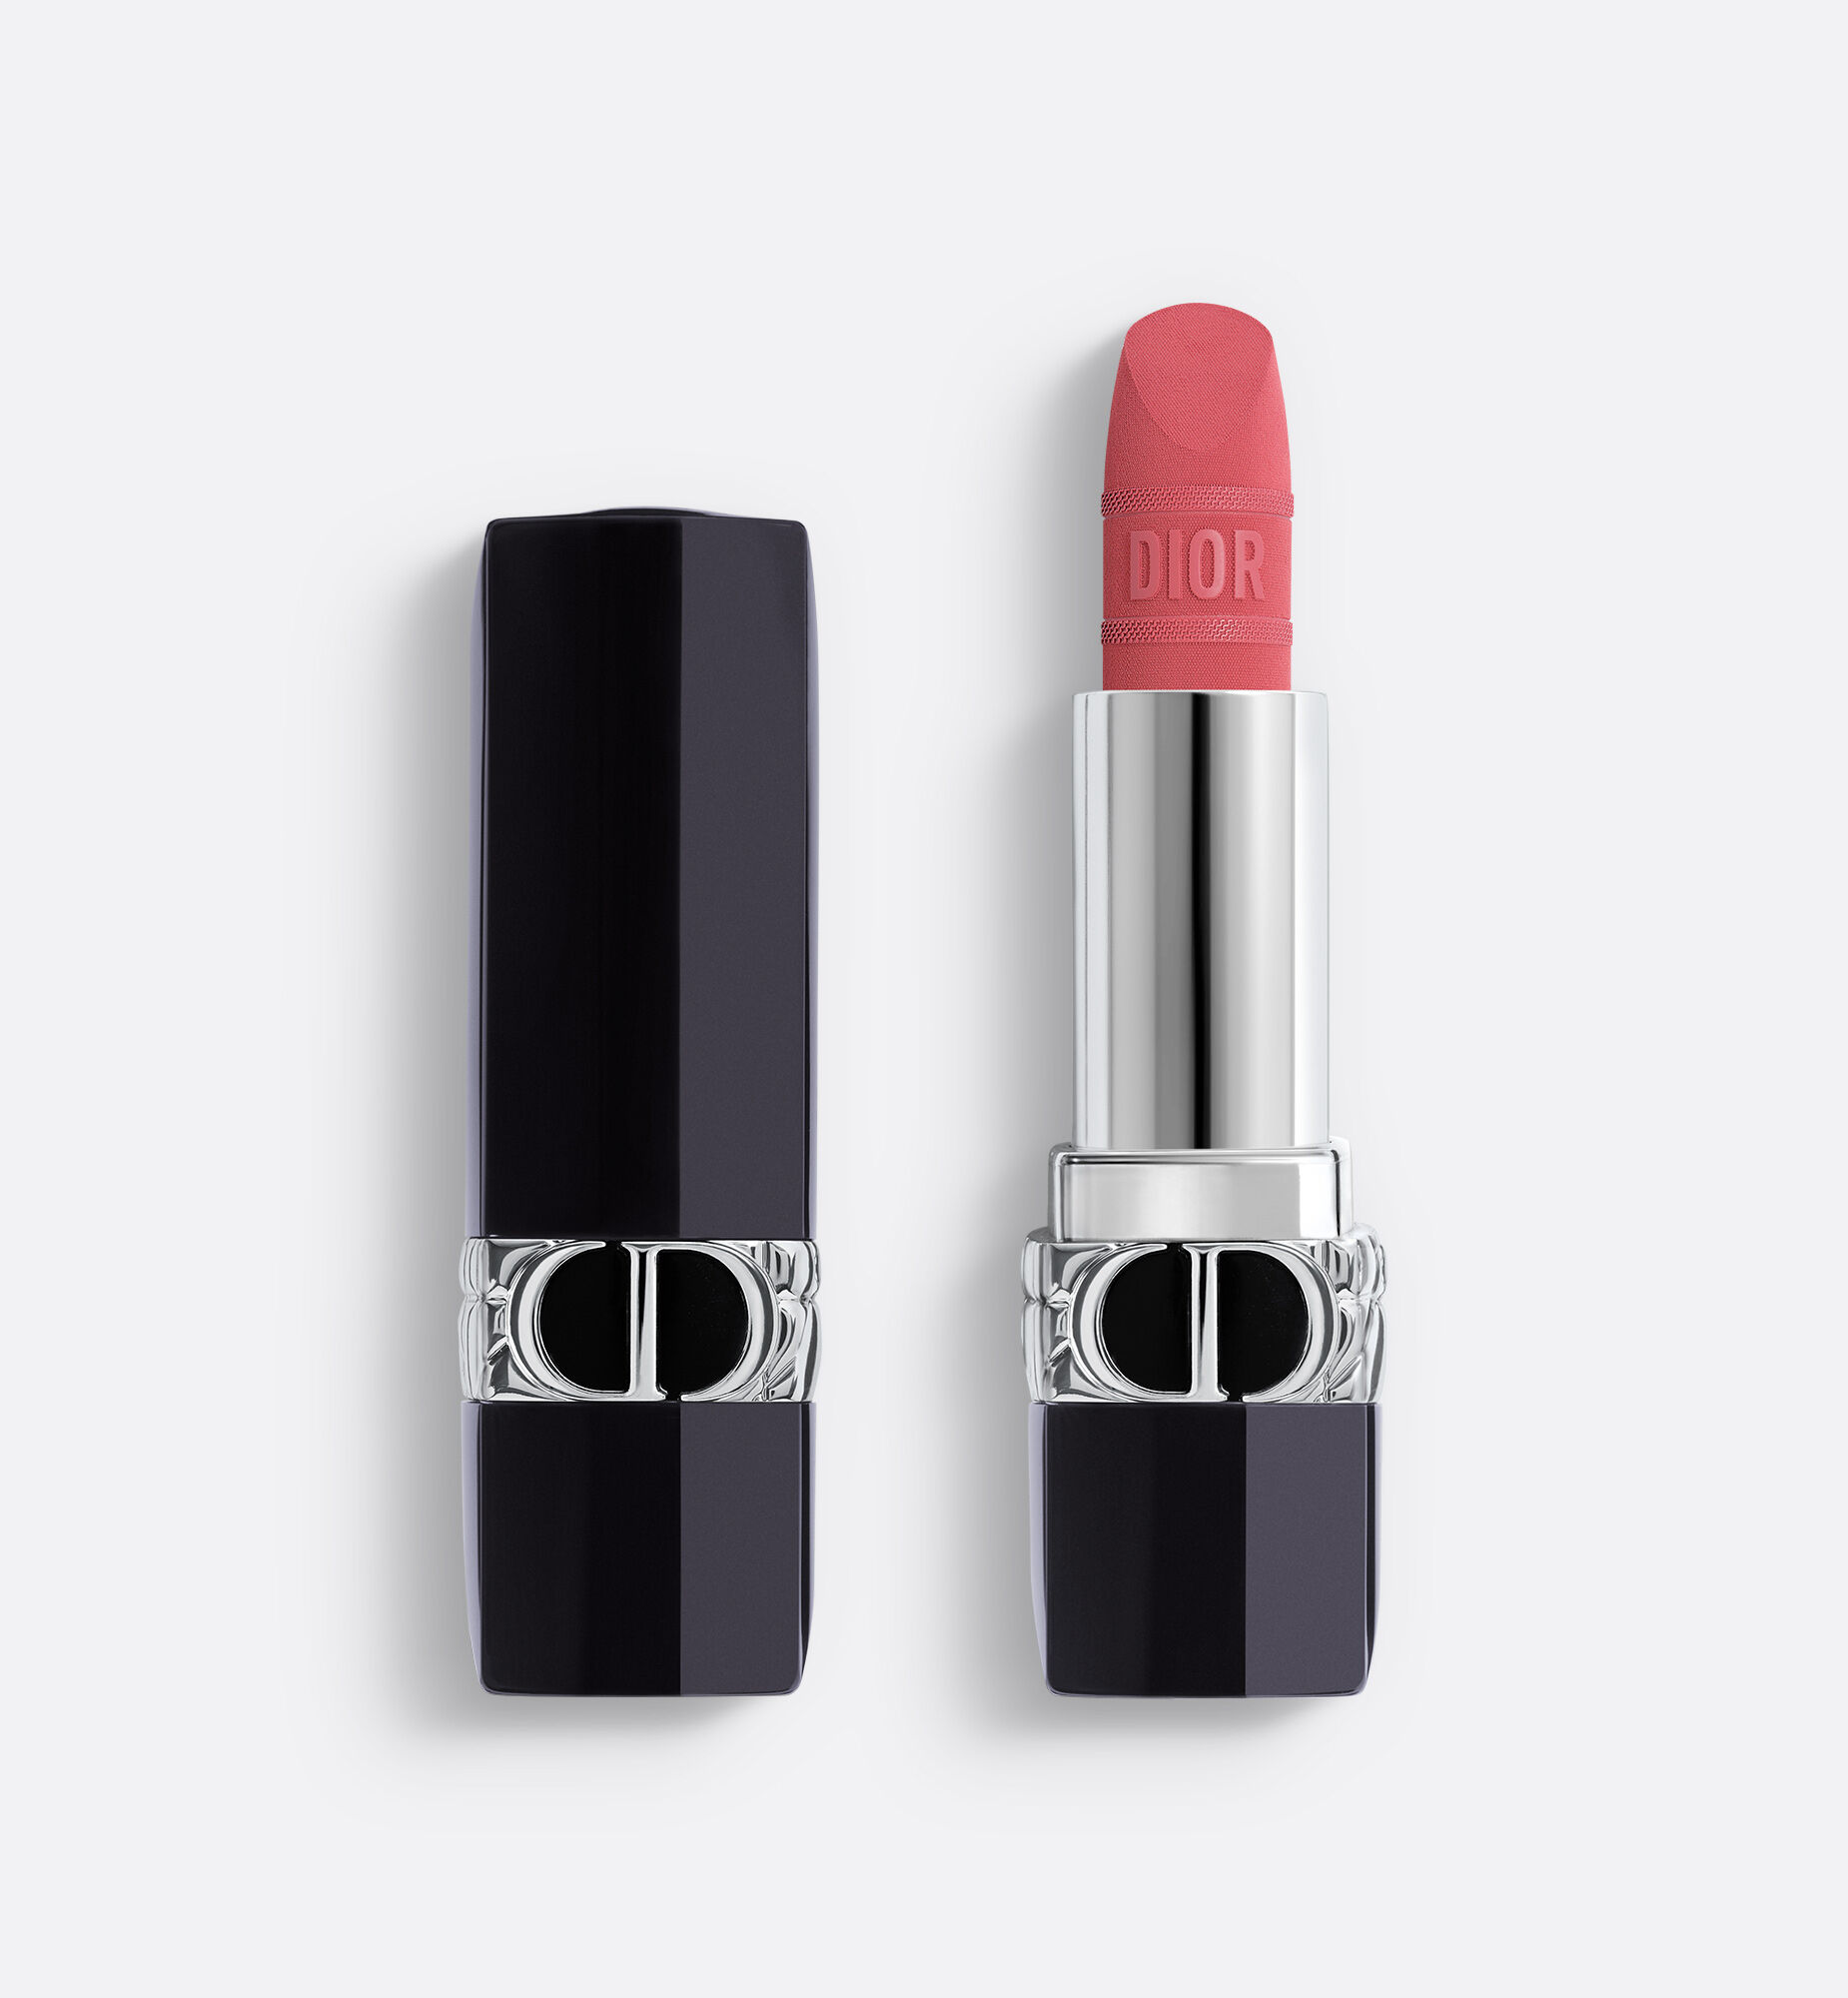 DIOR ADDICT LIP GLOW  Colourreviving lip balm  24h hydration  97   Dior Online Boutique Australia